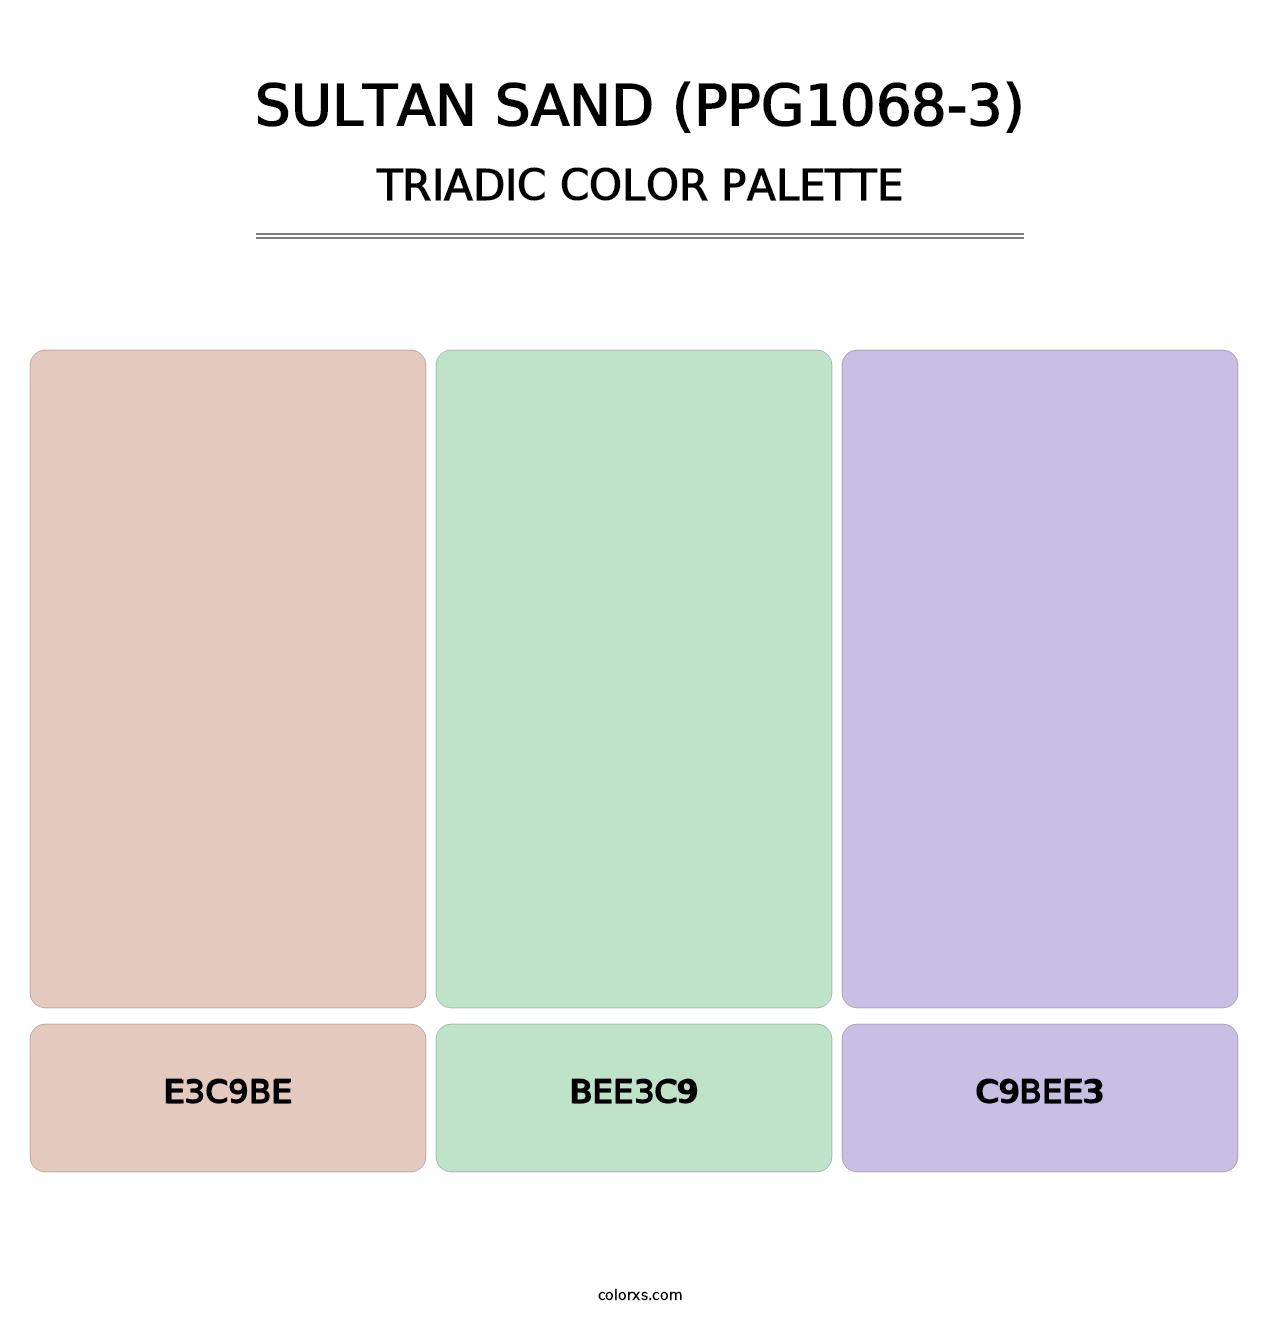 Sultan Sand (PPG1068-3) - Triadic Color Palette